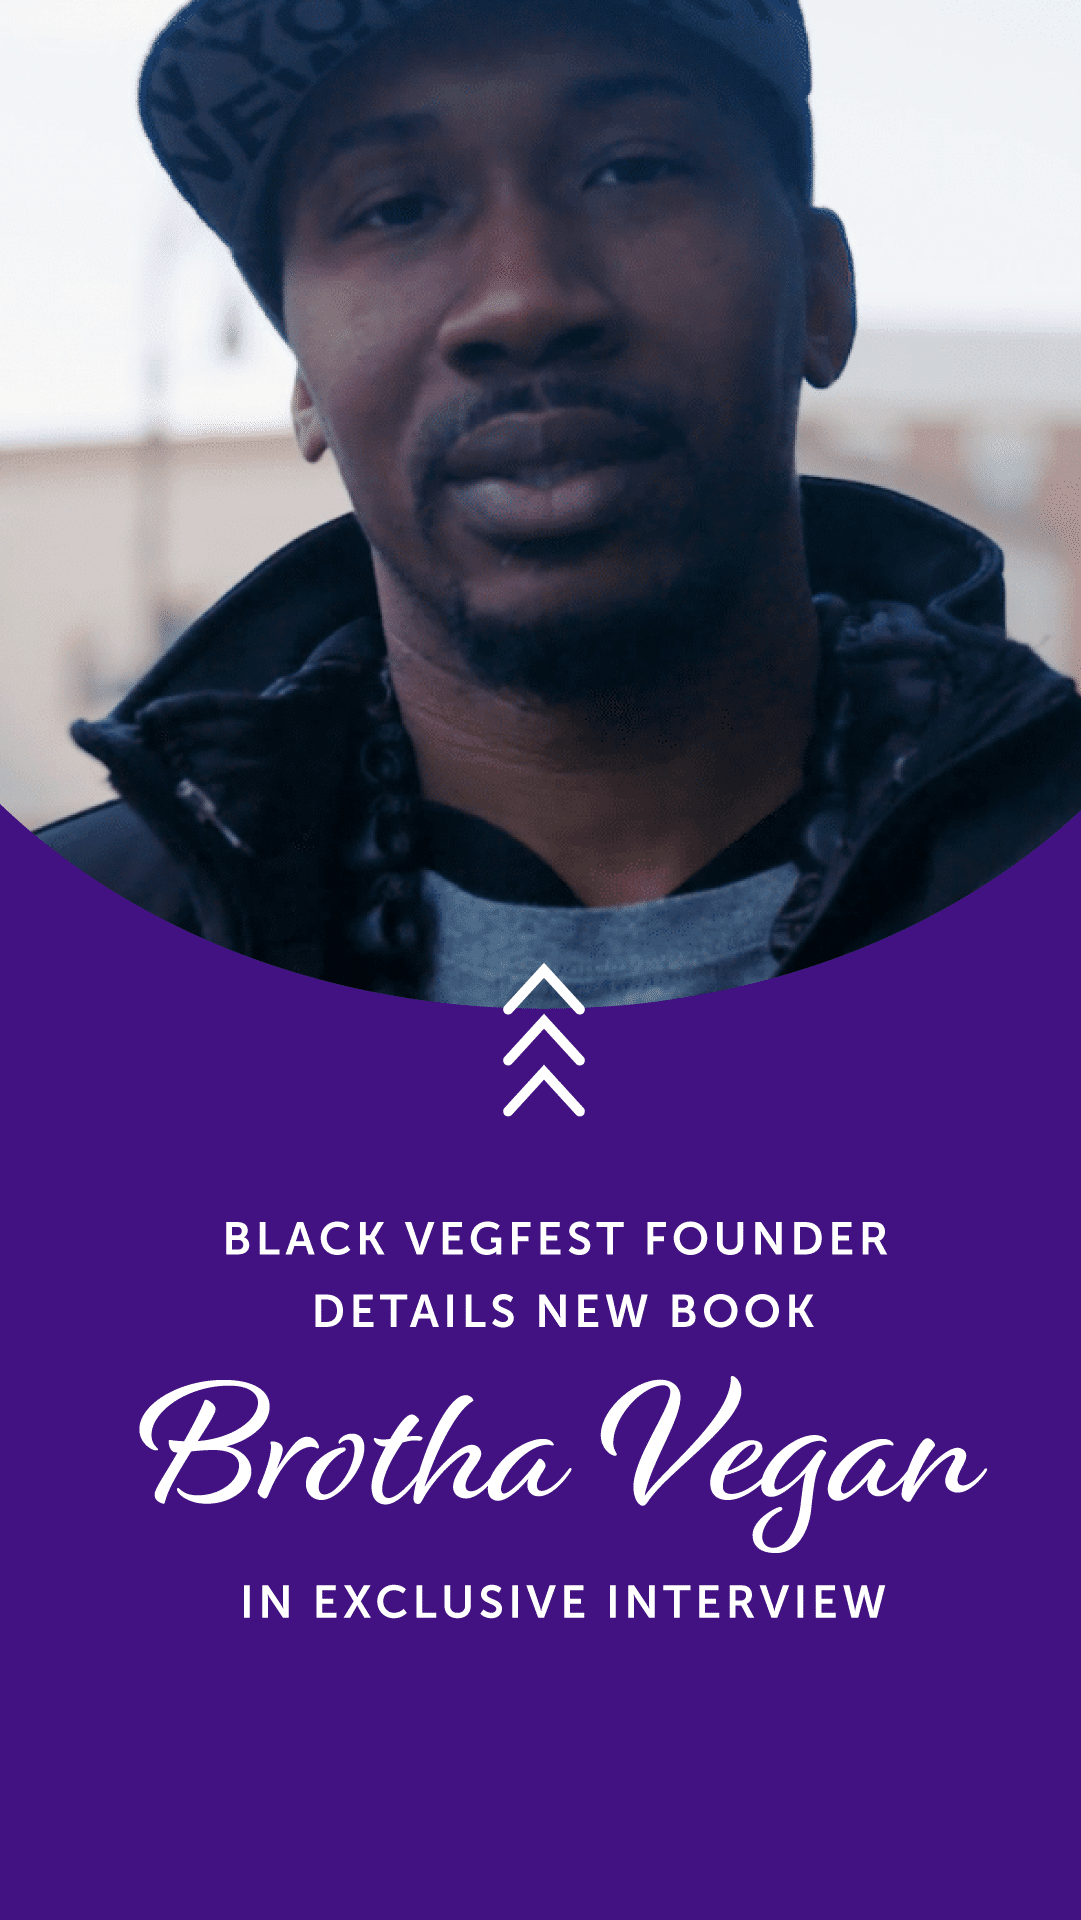 Black VegFest Founder Details New Book—Brotha Vegan—in Exclusive Interview